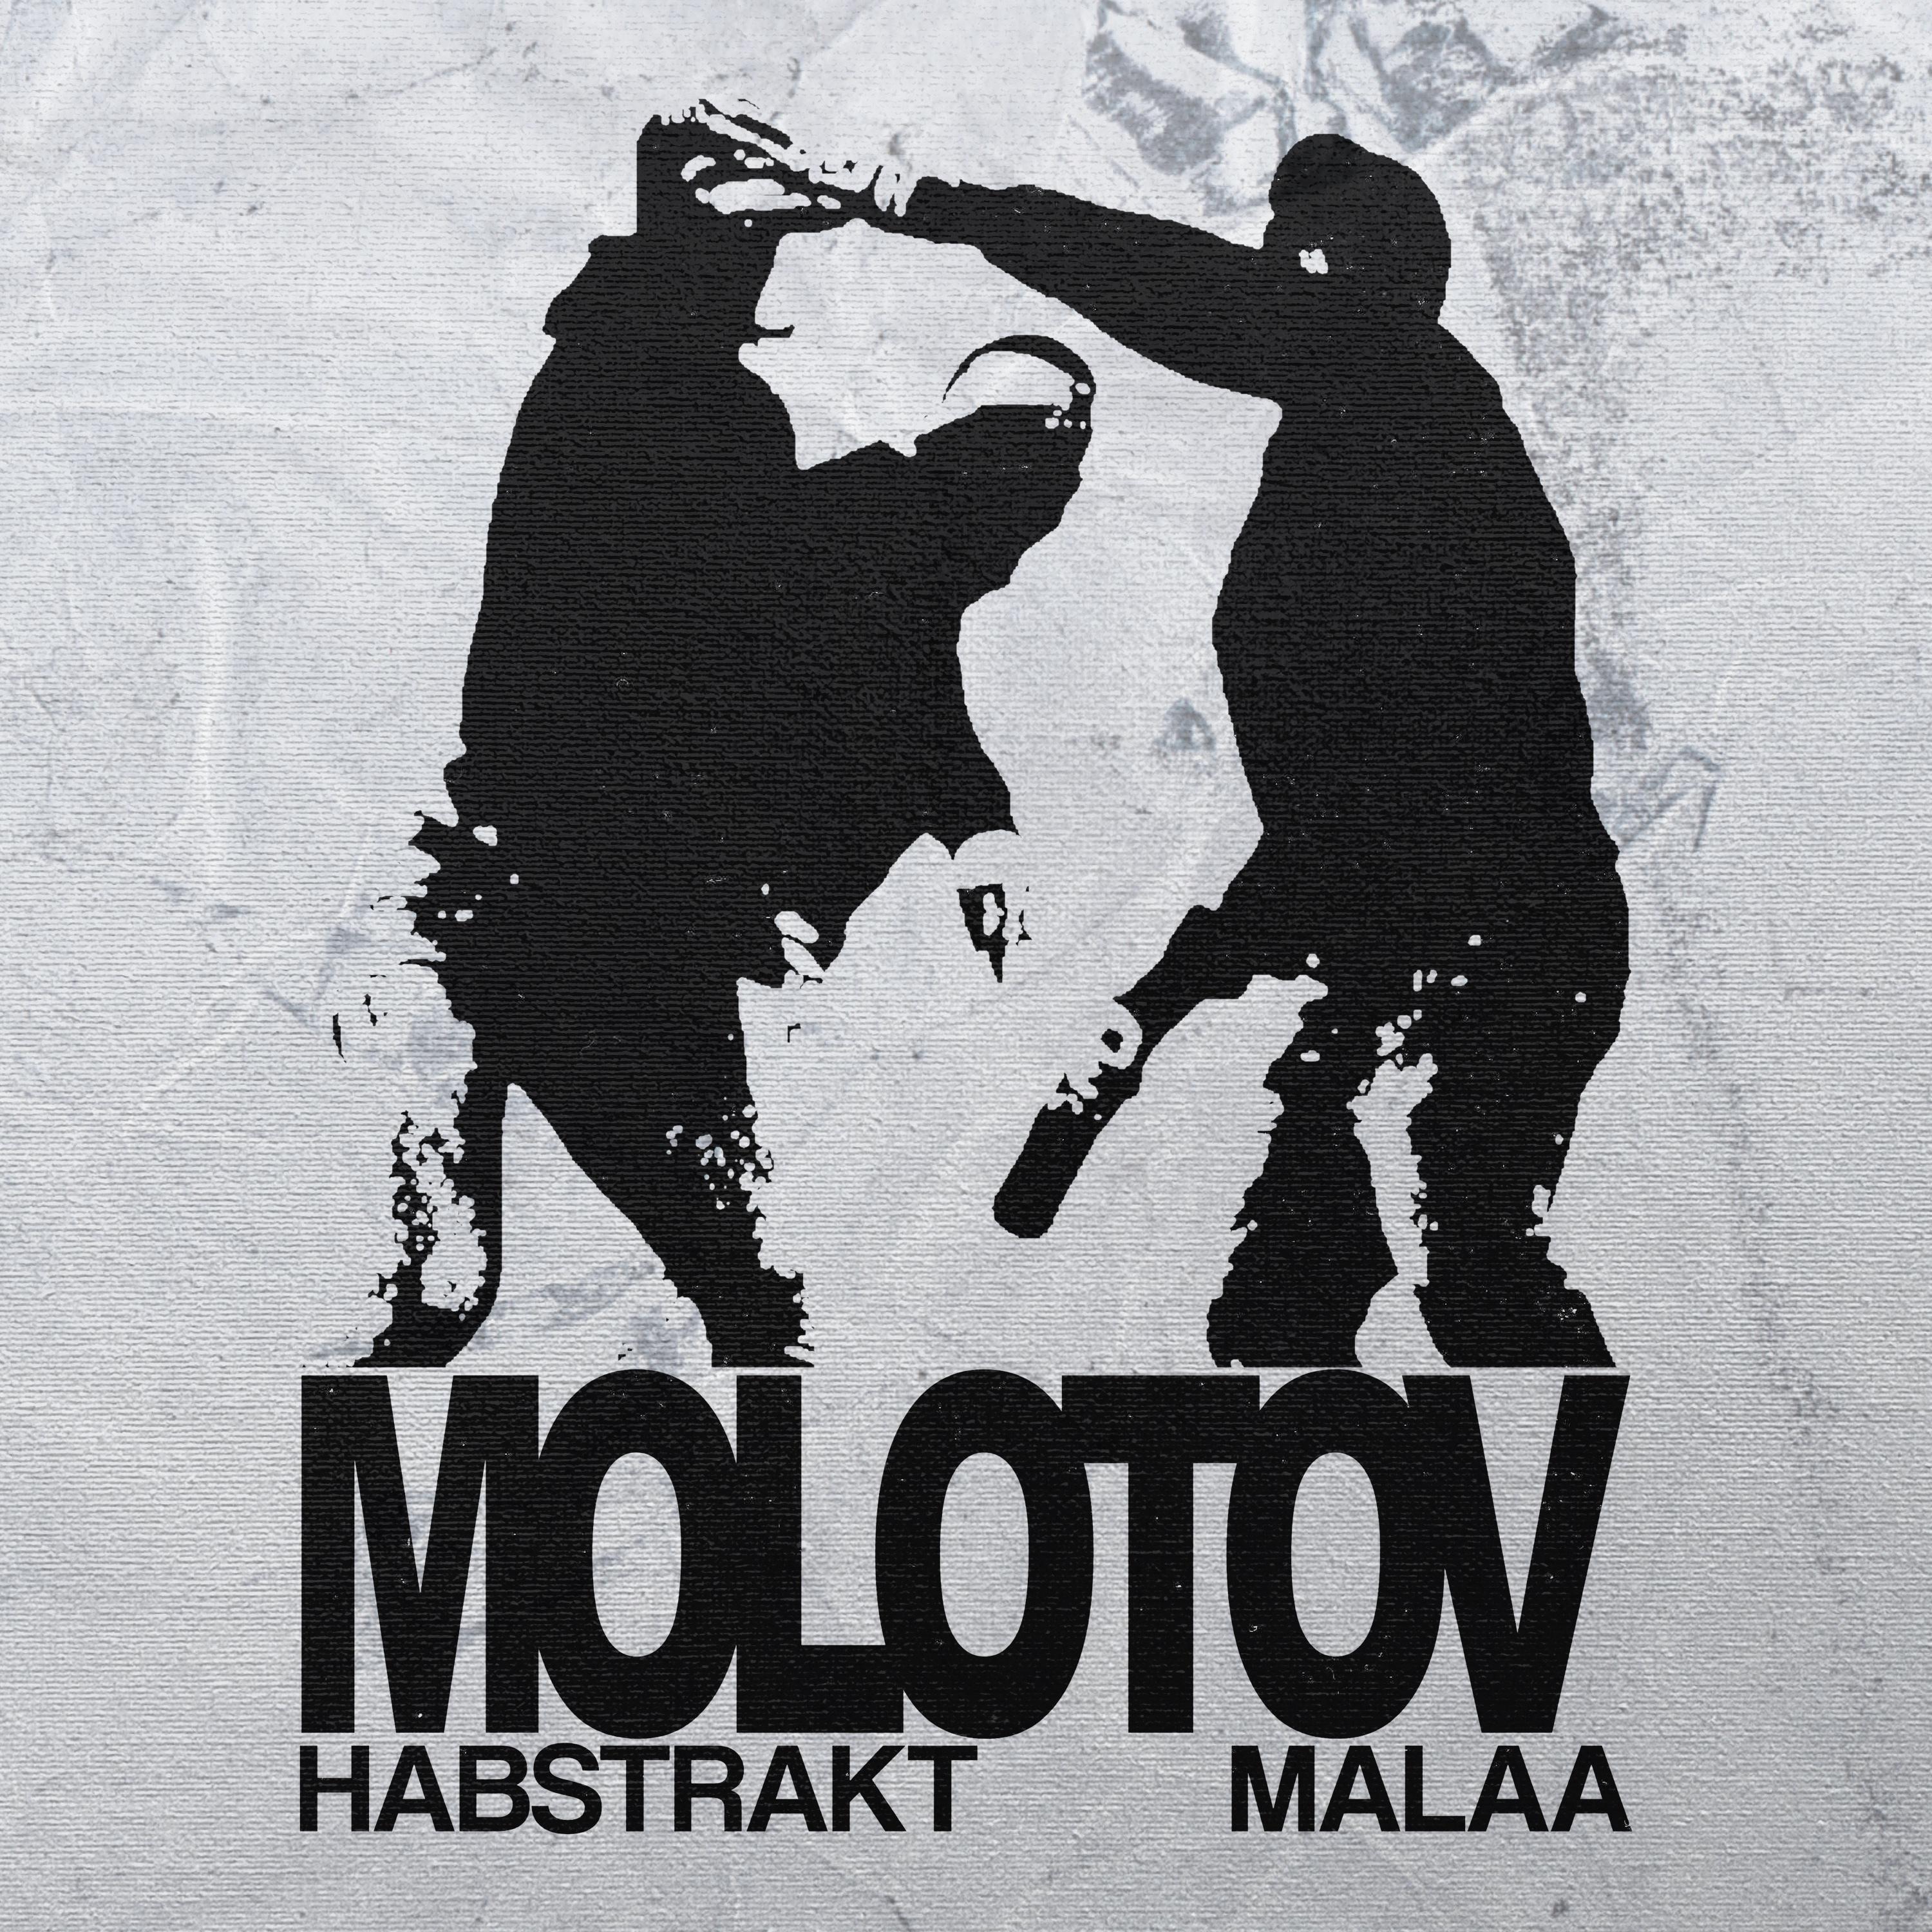 Habstrakt - Molotov